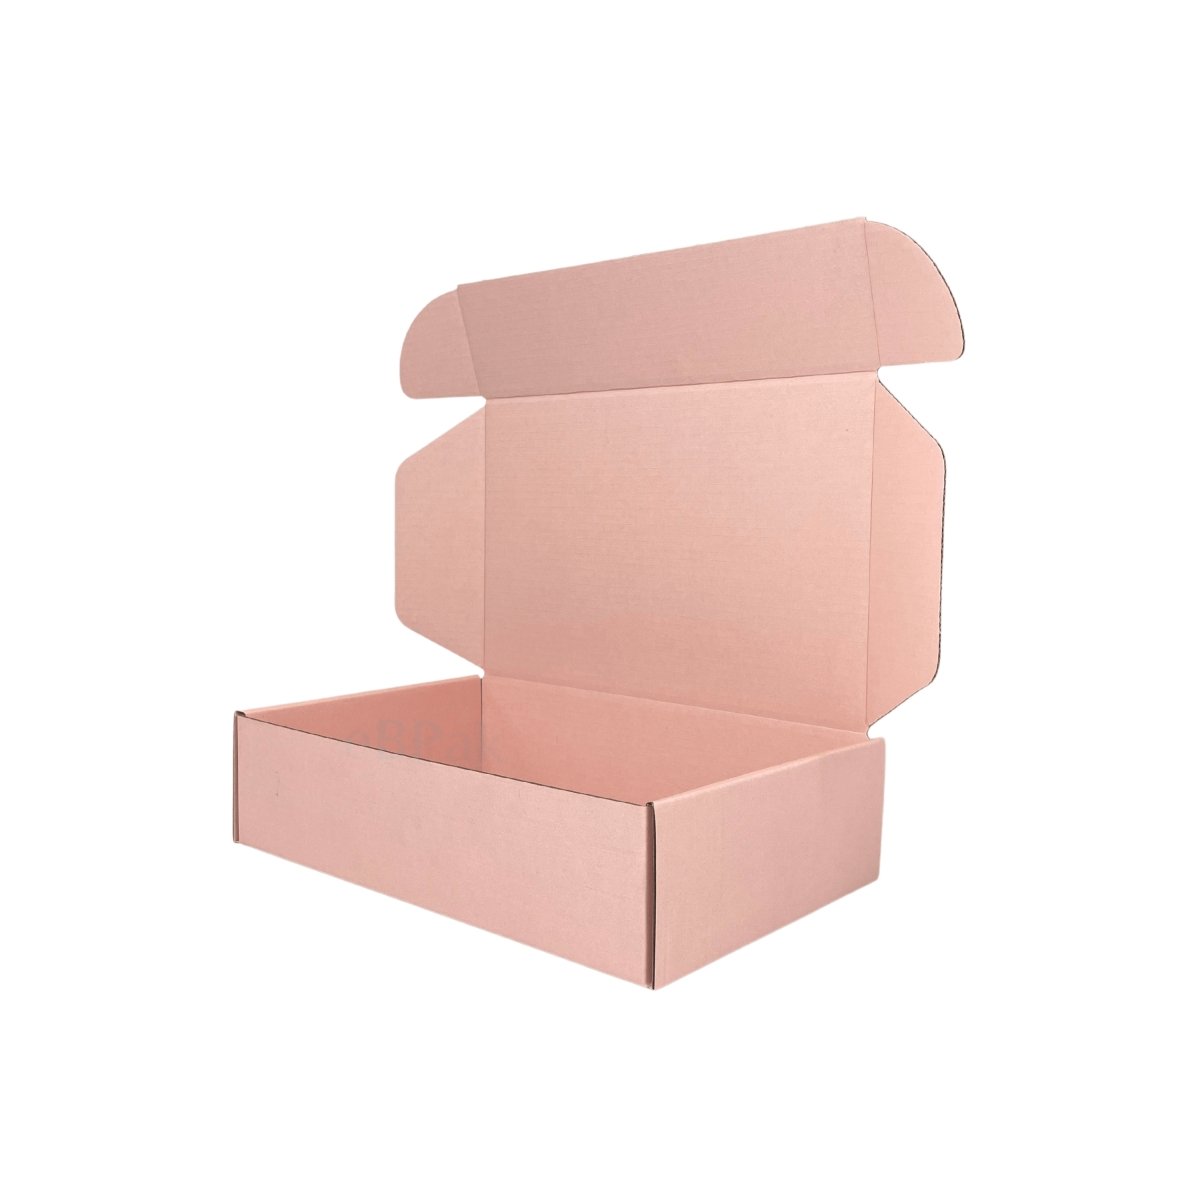 Premium Full Rose Pink Mailing Box 240 x 150 x 60mm